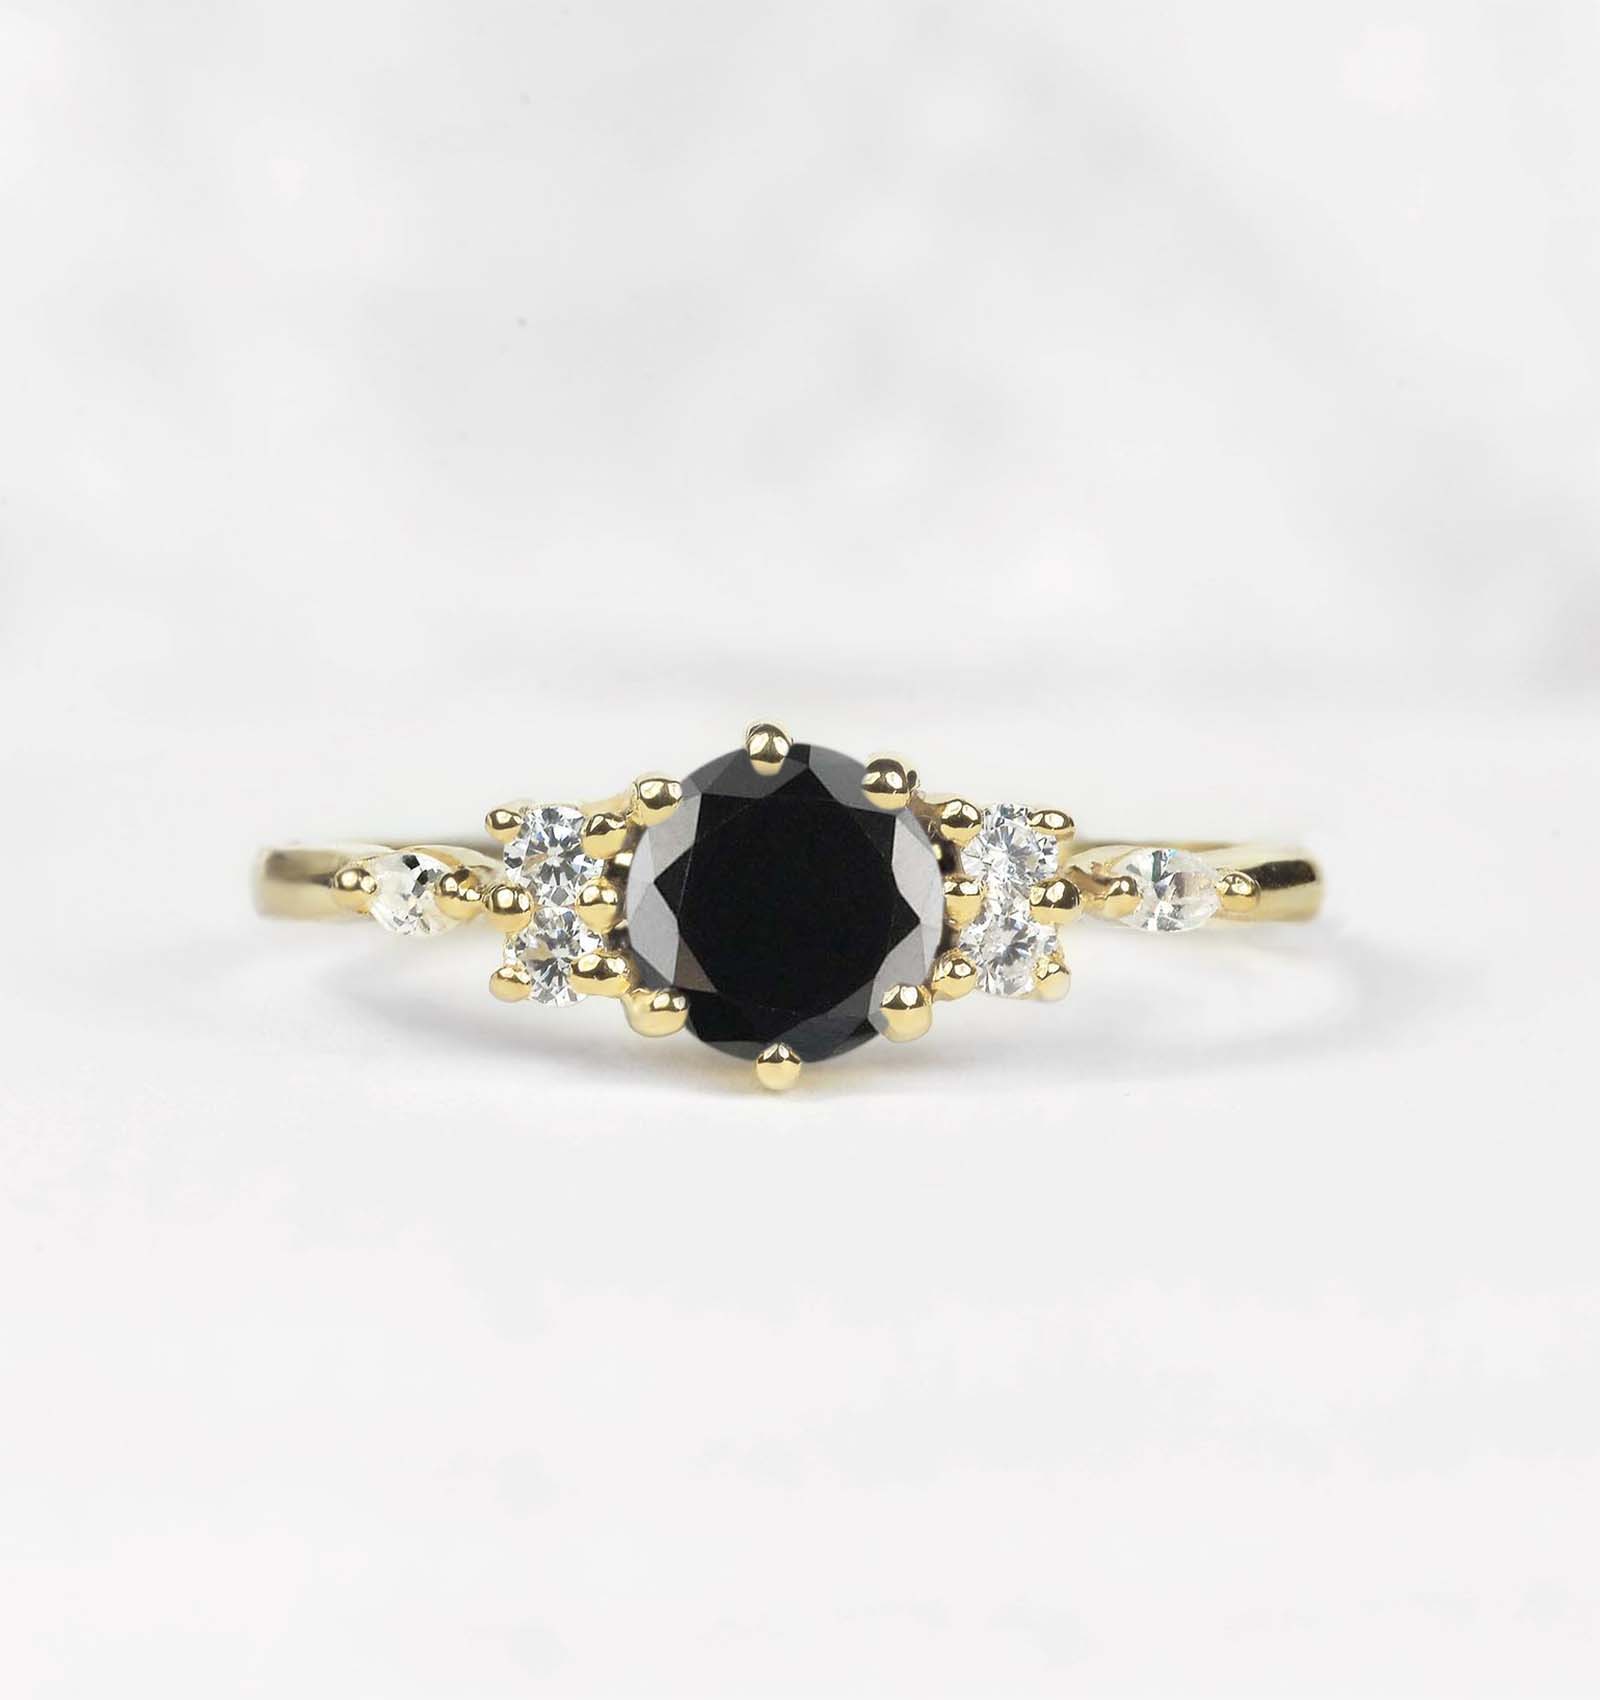 6mm black diamond diamond cluster ring